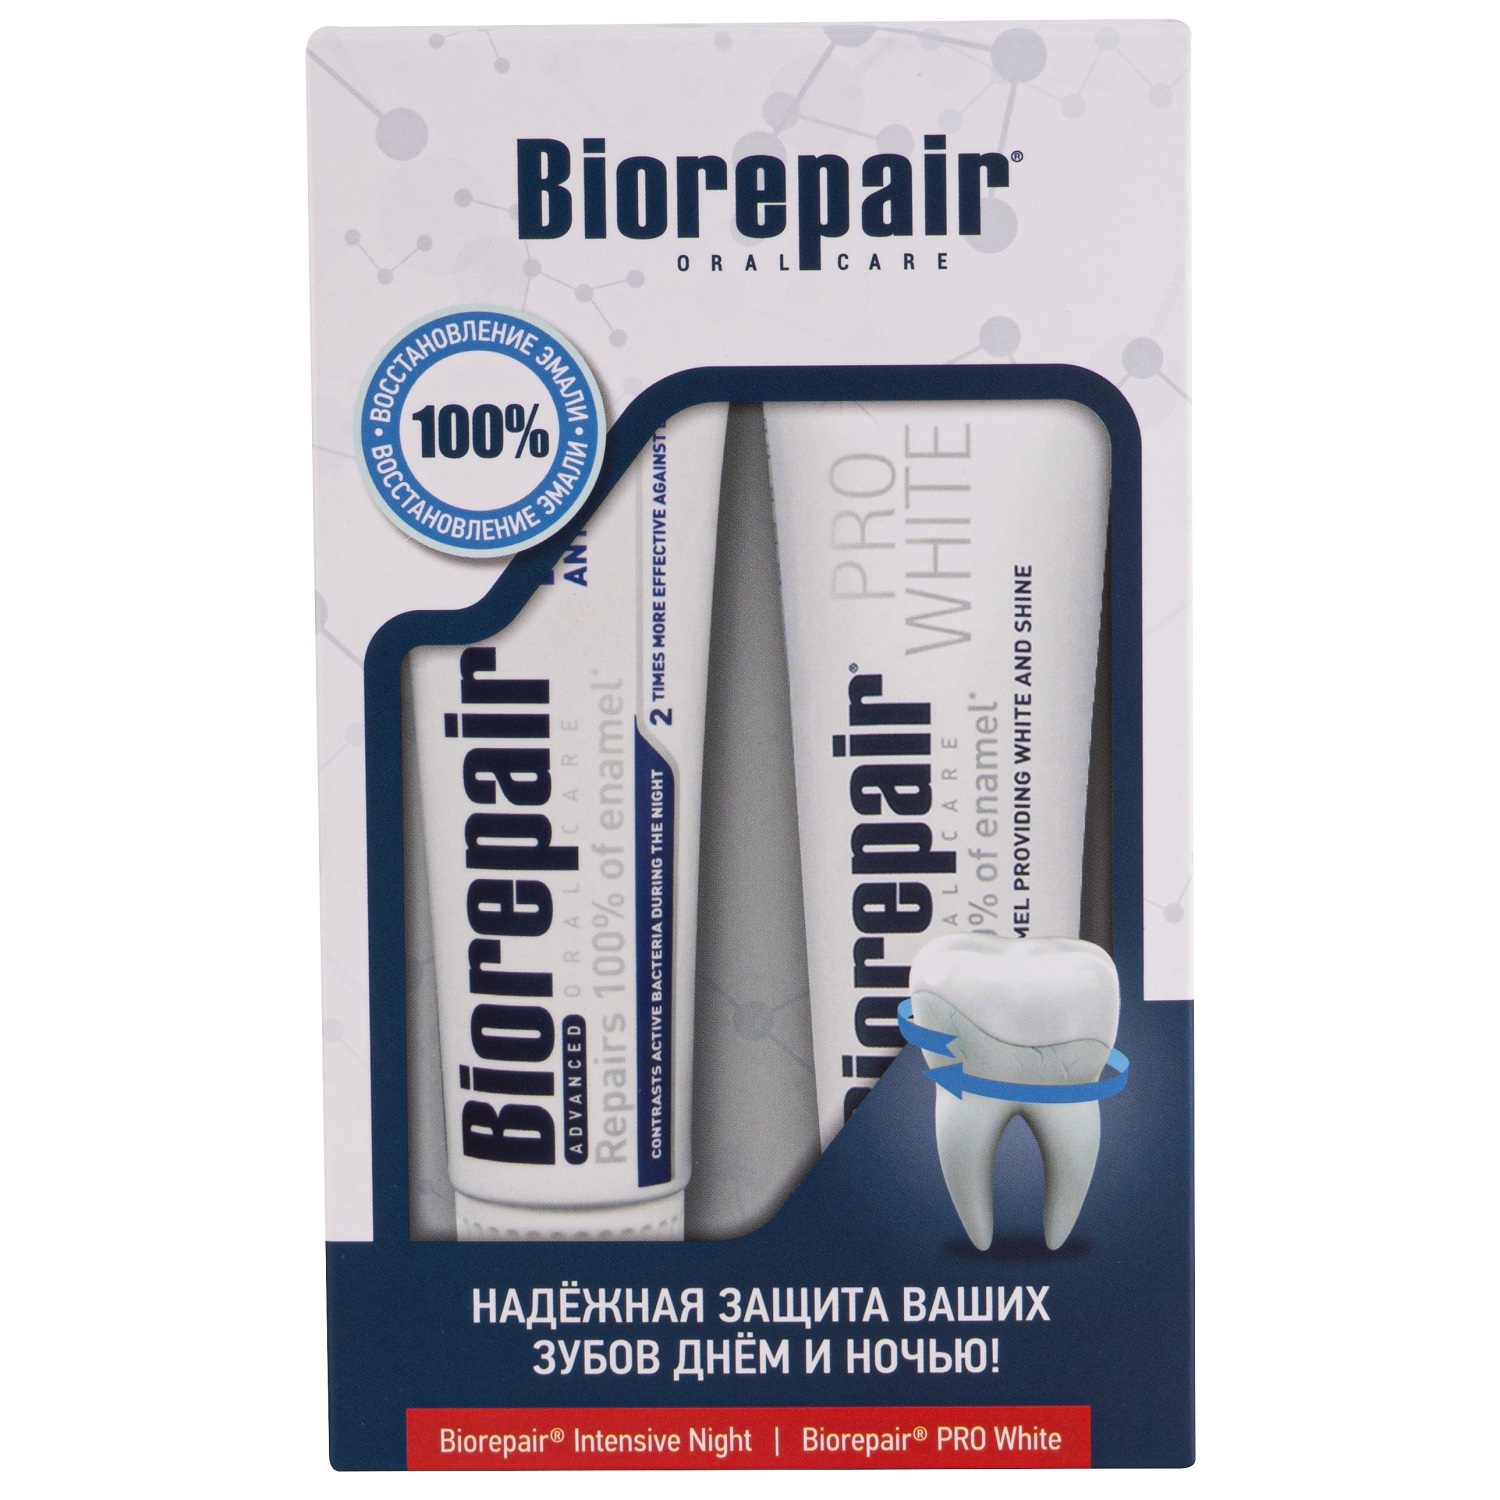 Biorepair Набор зубных паст Защита и блеск: Pro White 75 мл + Intensive Night Repair 75 мл (Biorepair, Отбеливание и лечение) biorepair набор зубных паст для сохранения белизны 2х75 мл biorepair отбеливание и лечение